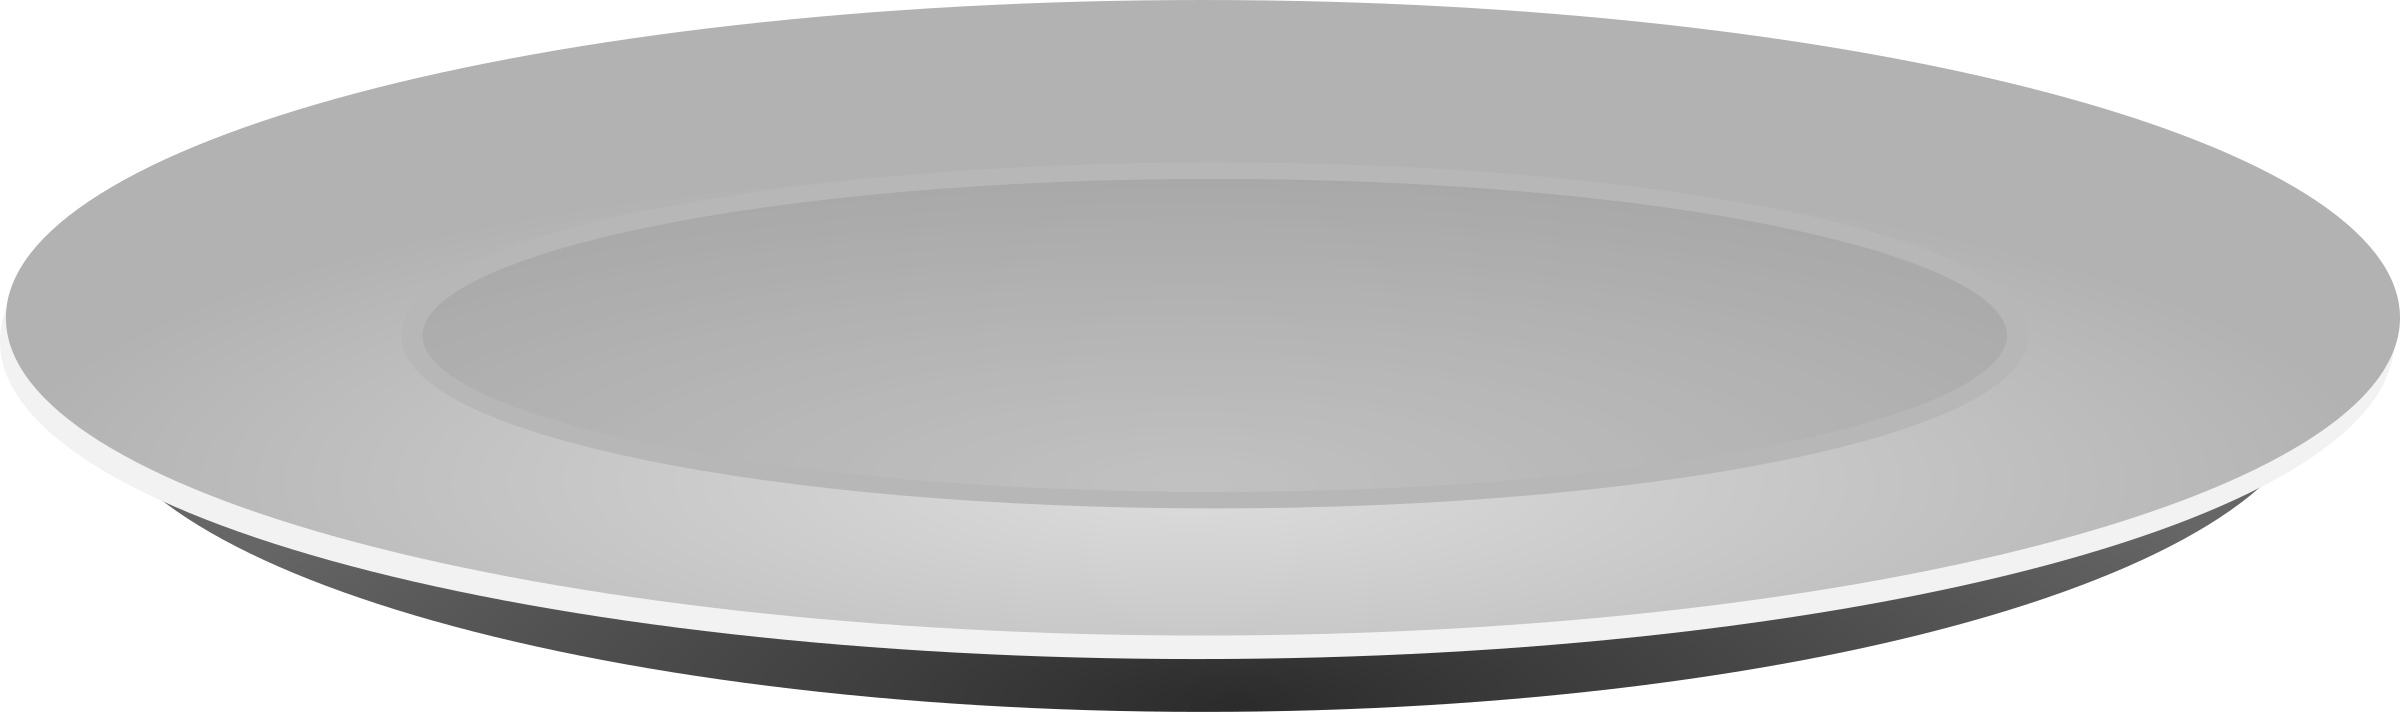 Plain grey plate big. Dish clipart dish china